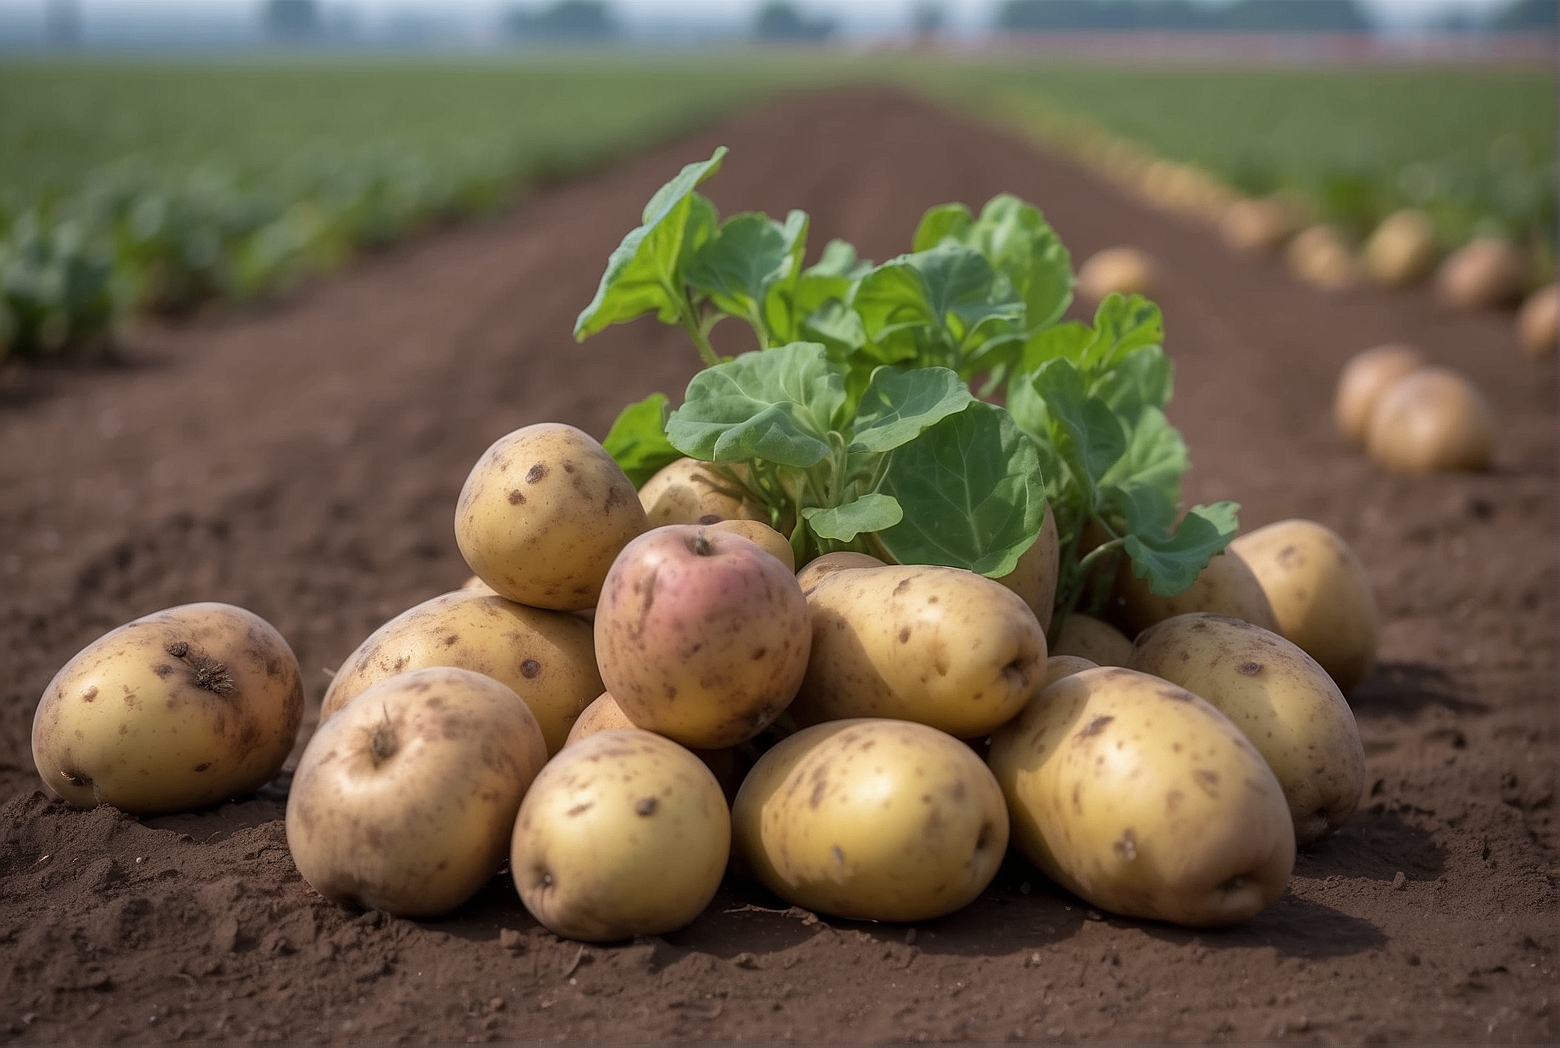 Default Are Charlotte potatoes determinate or indeterminate 0